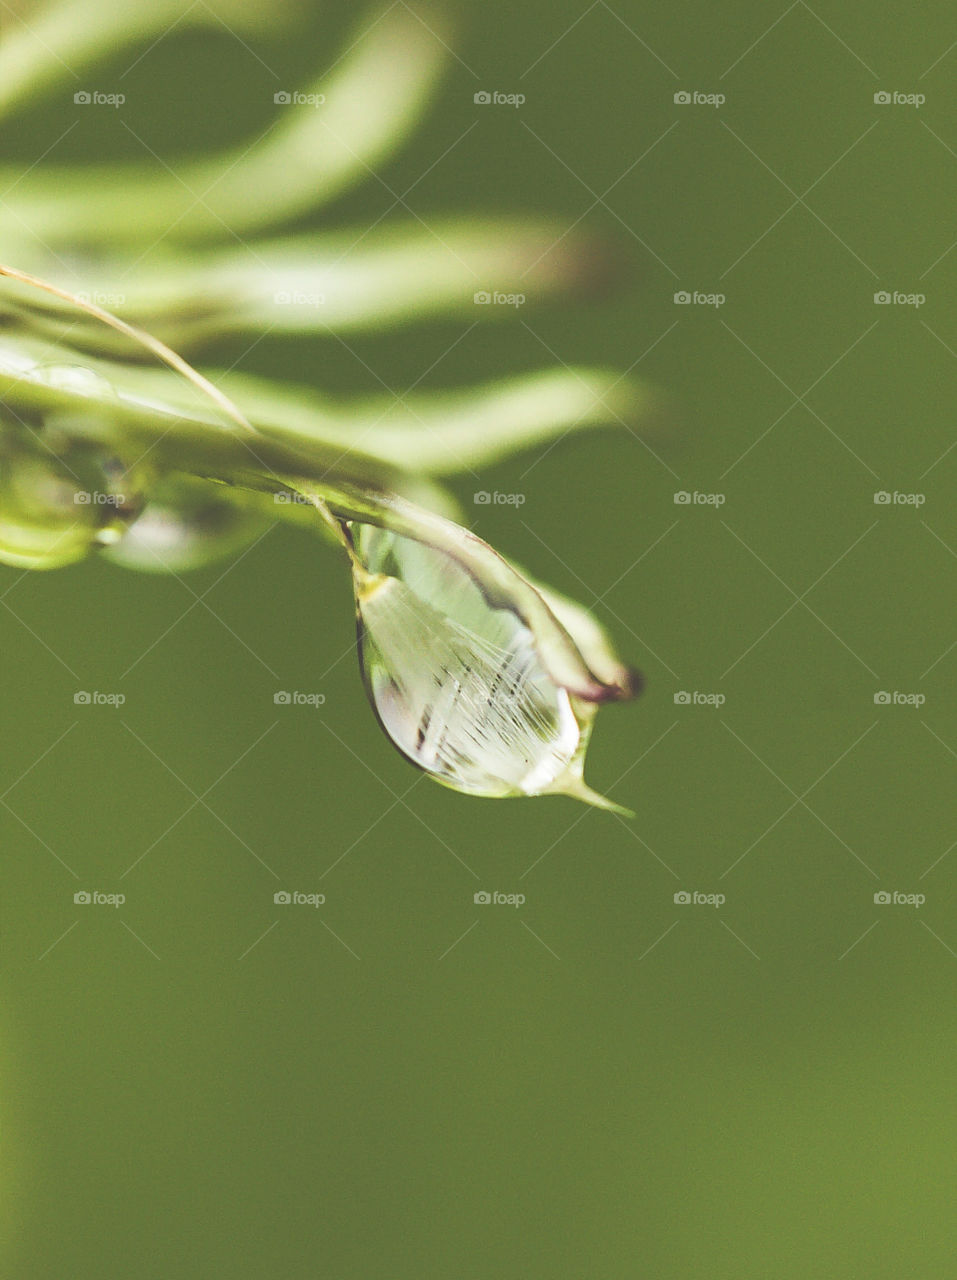 dandelion stem in water droplet